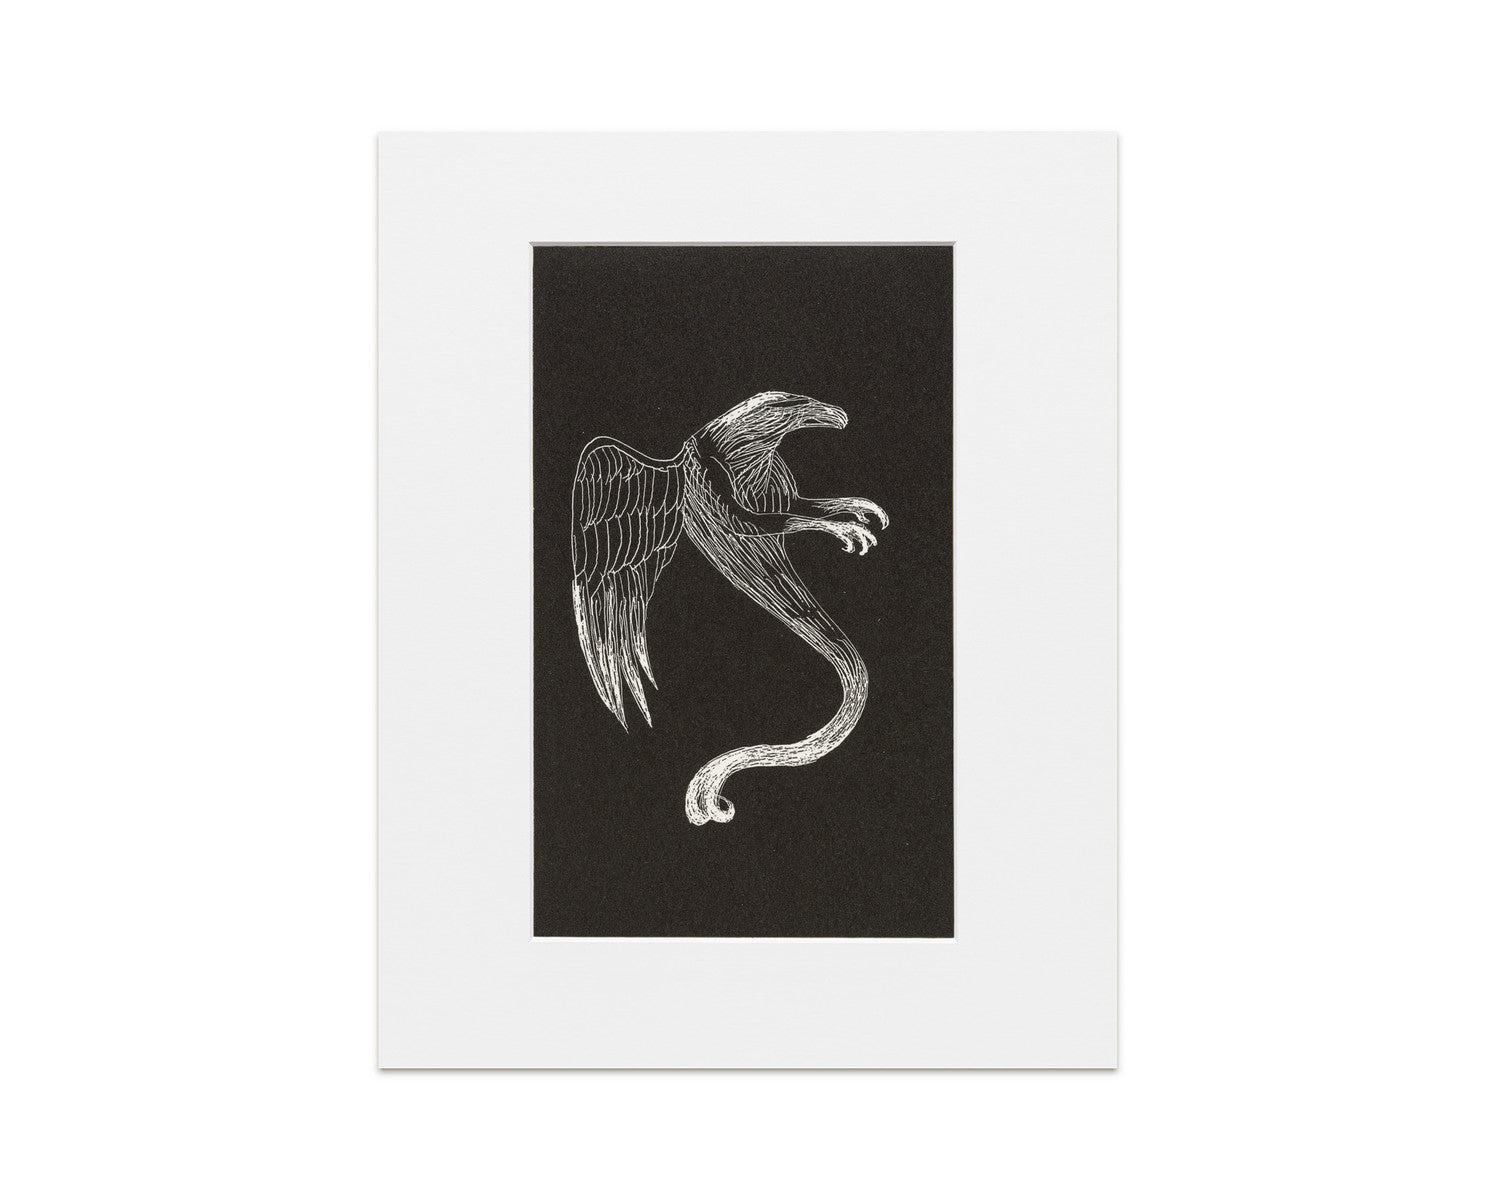 Bill Hammond "Giant Eagle" Reproduction Print